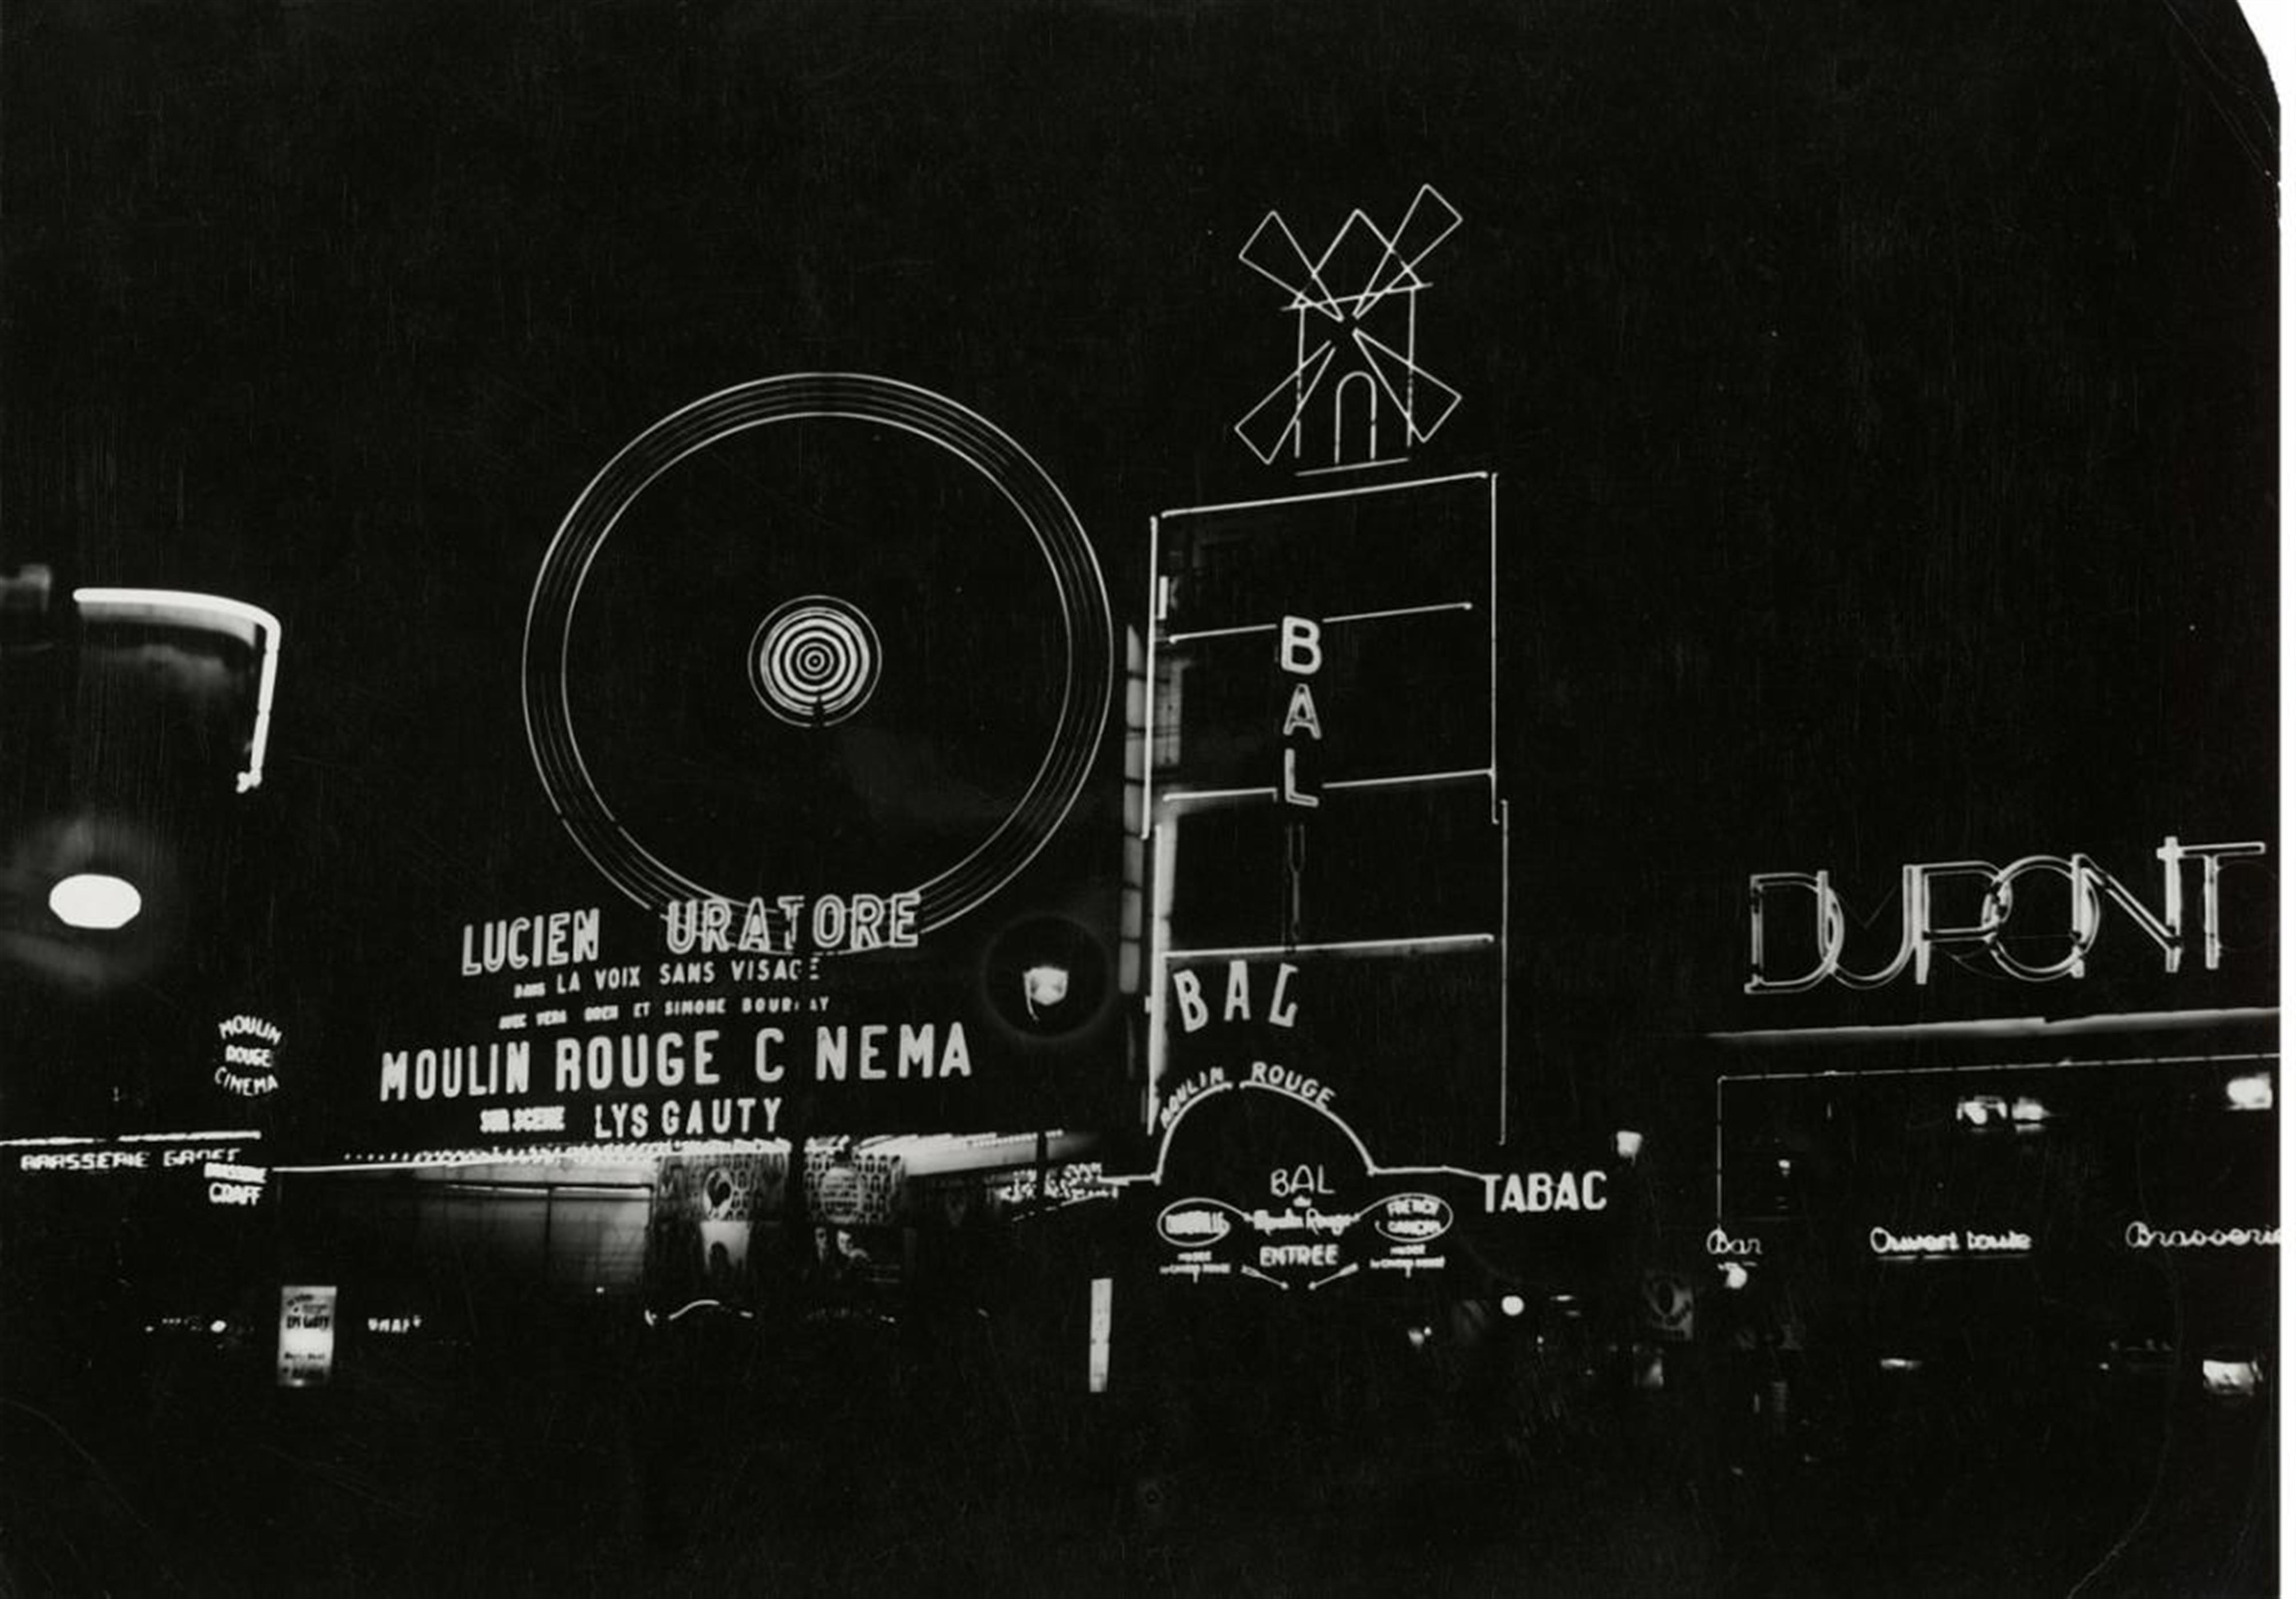 Germaine Krull - Moulin Rouge et Place Blanche - image-1